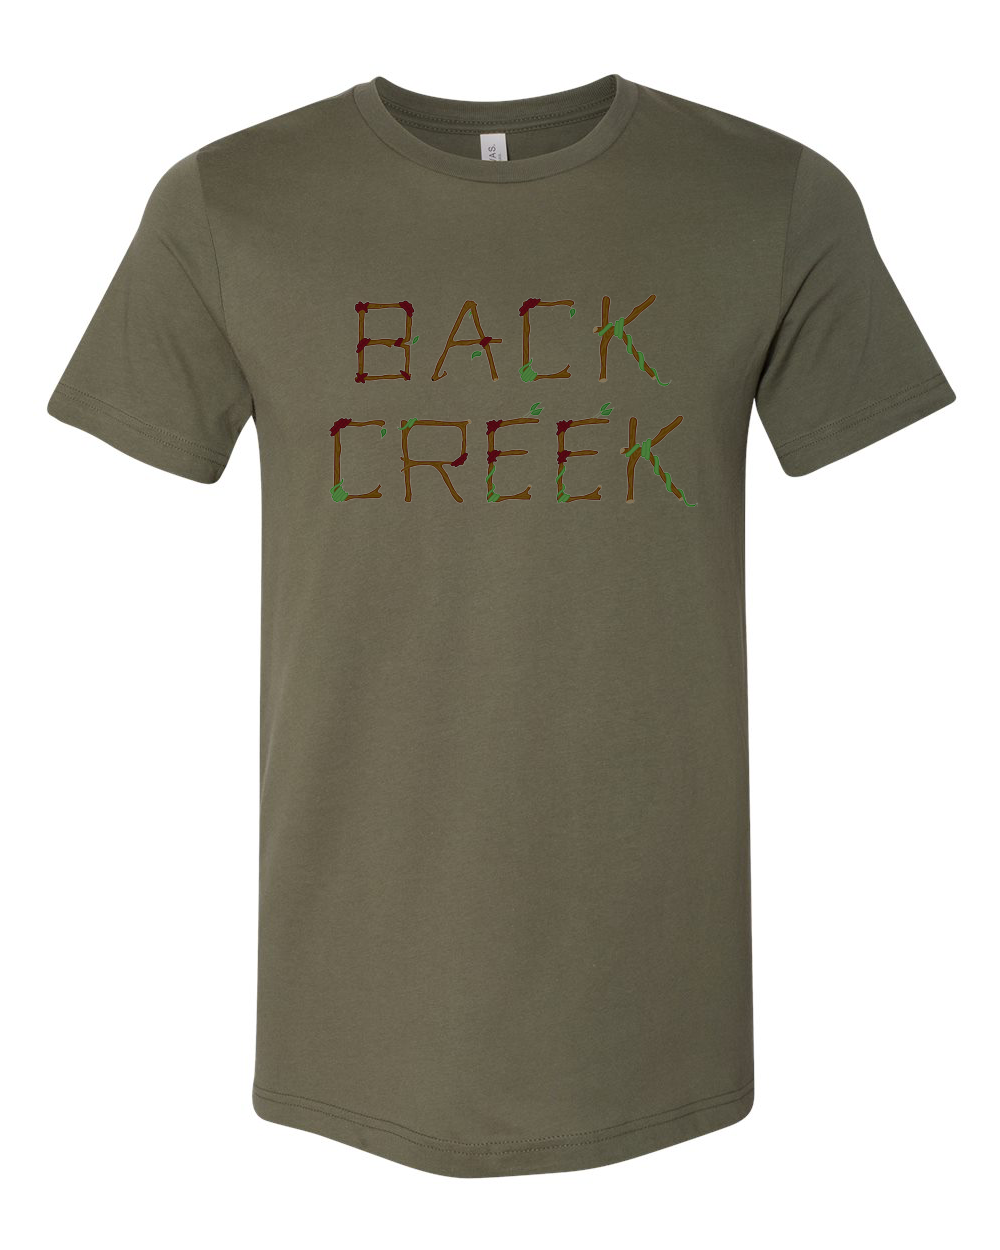 Back Creek : Sticks Tee